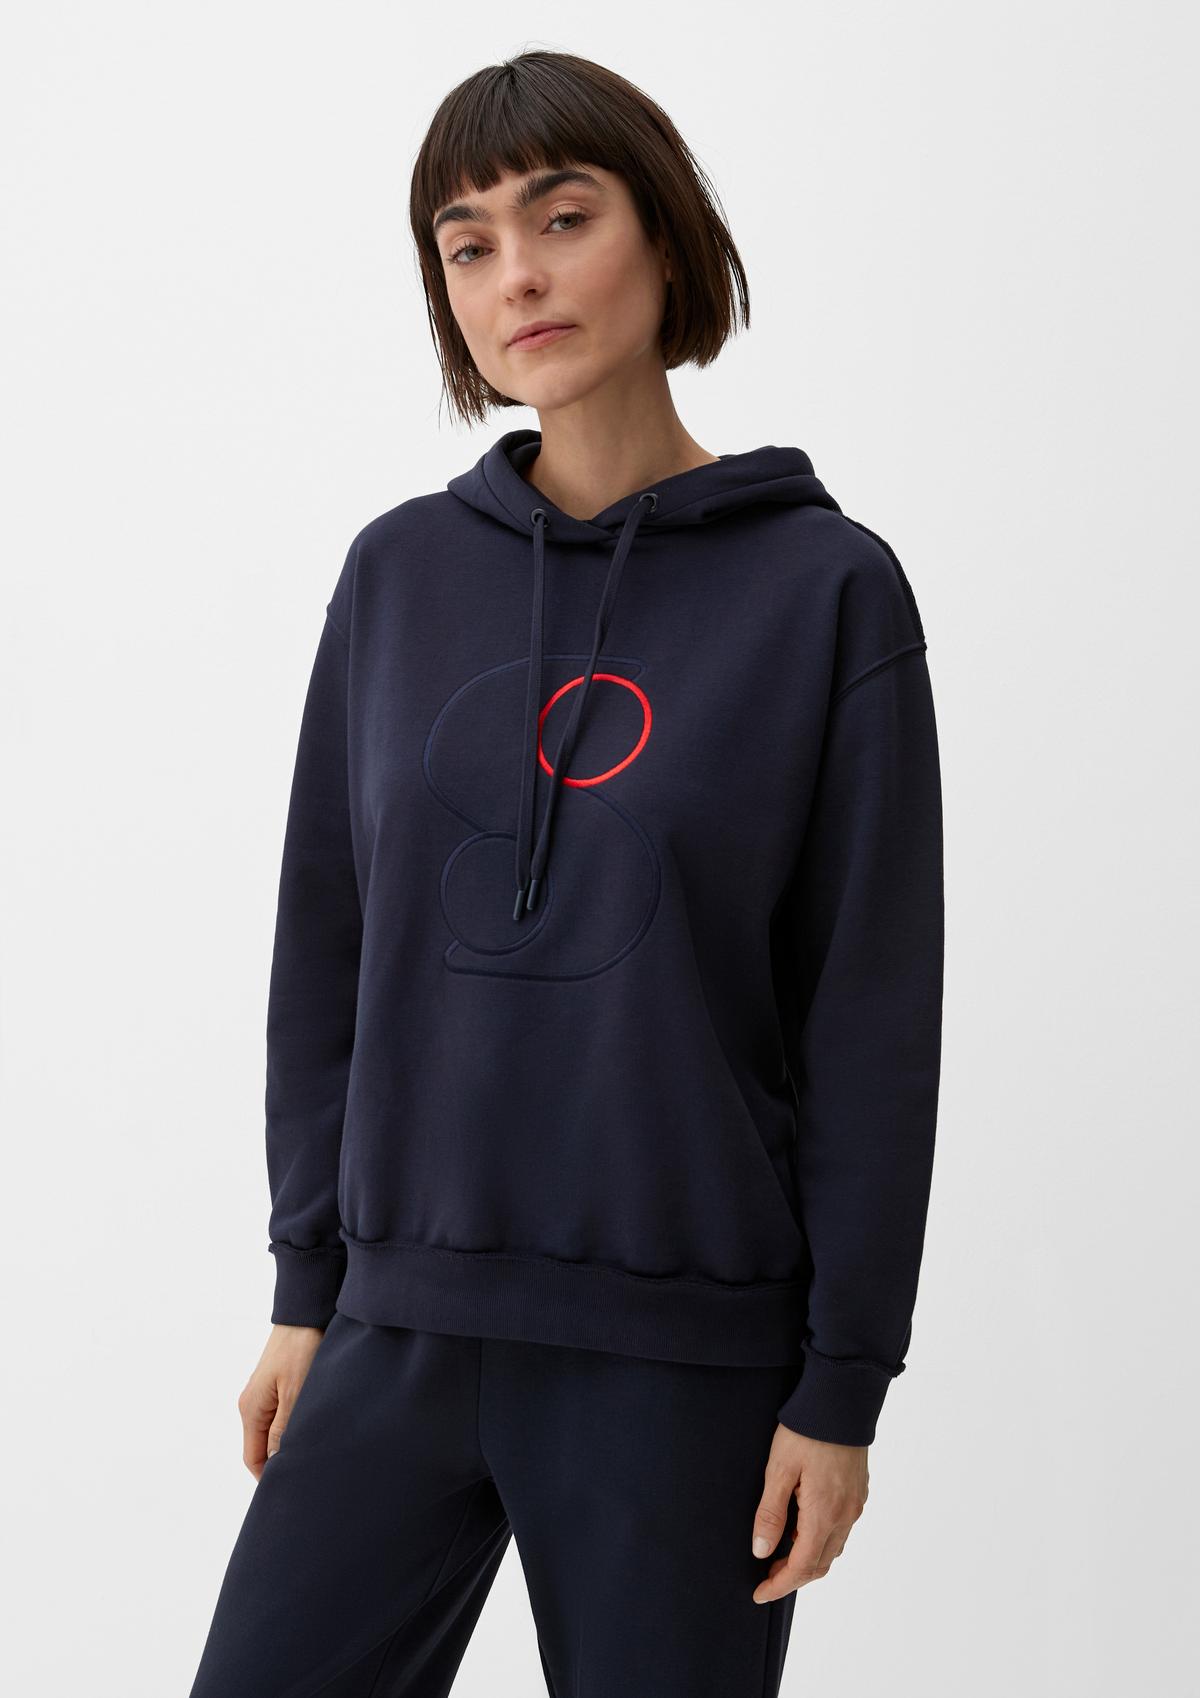 look in layered - a navy Sweatshirt